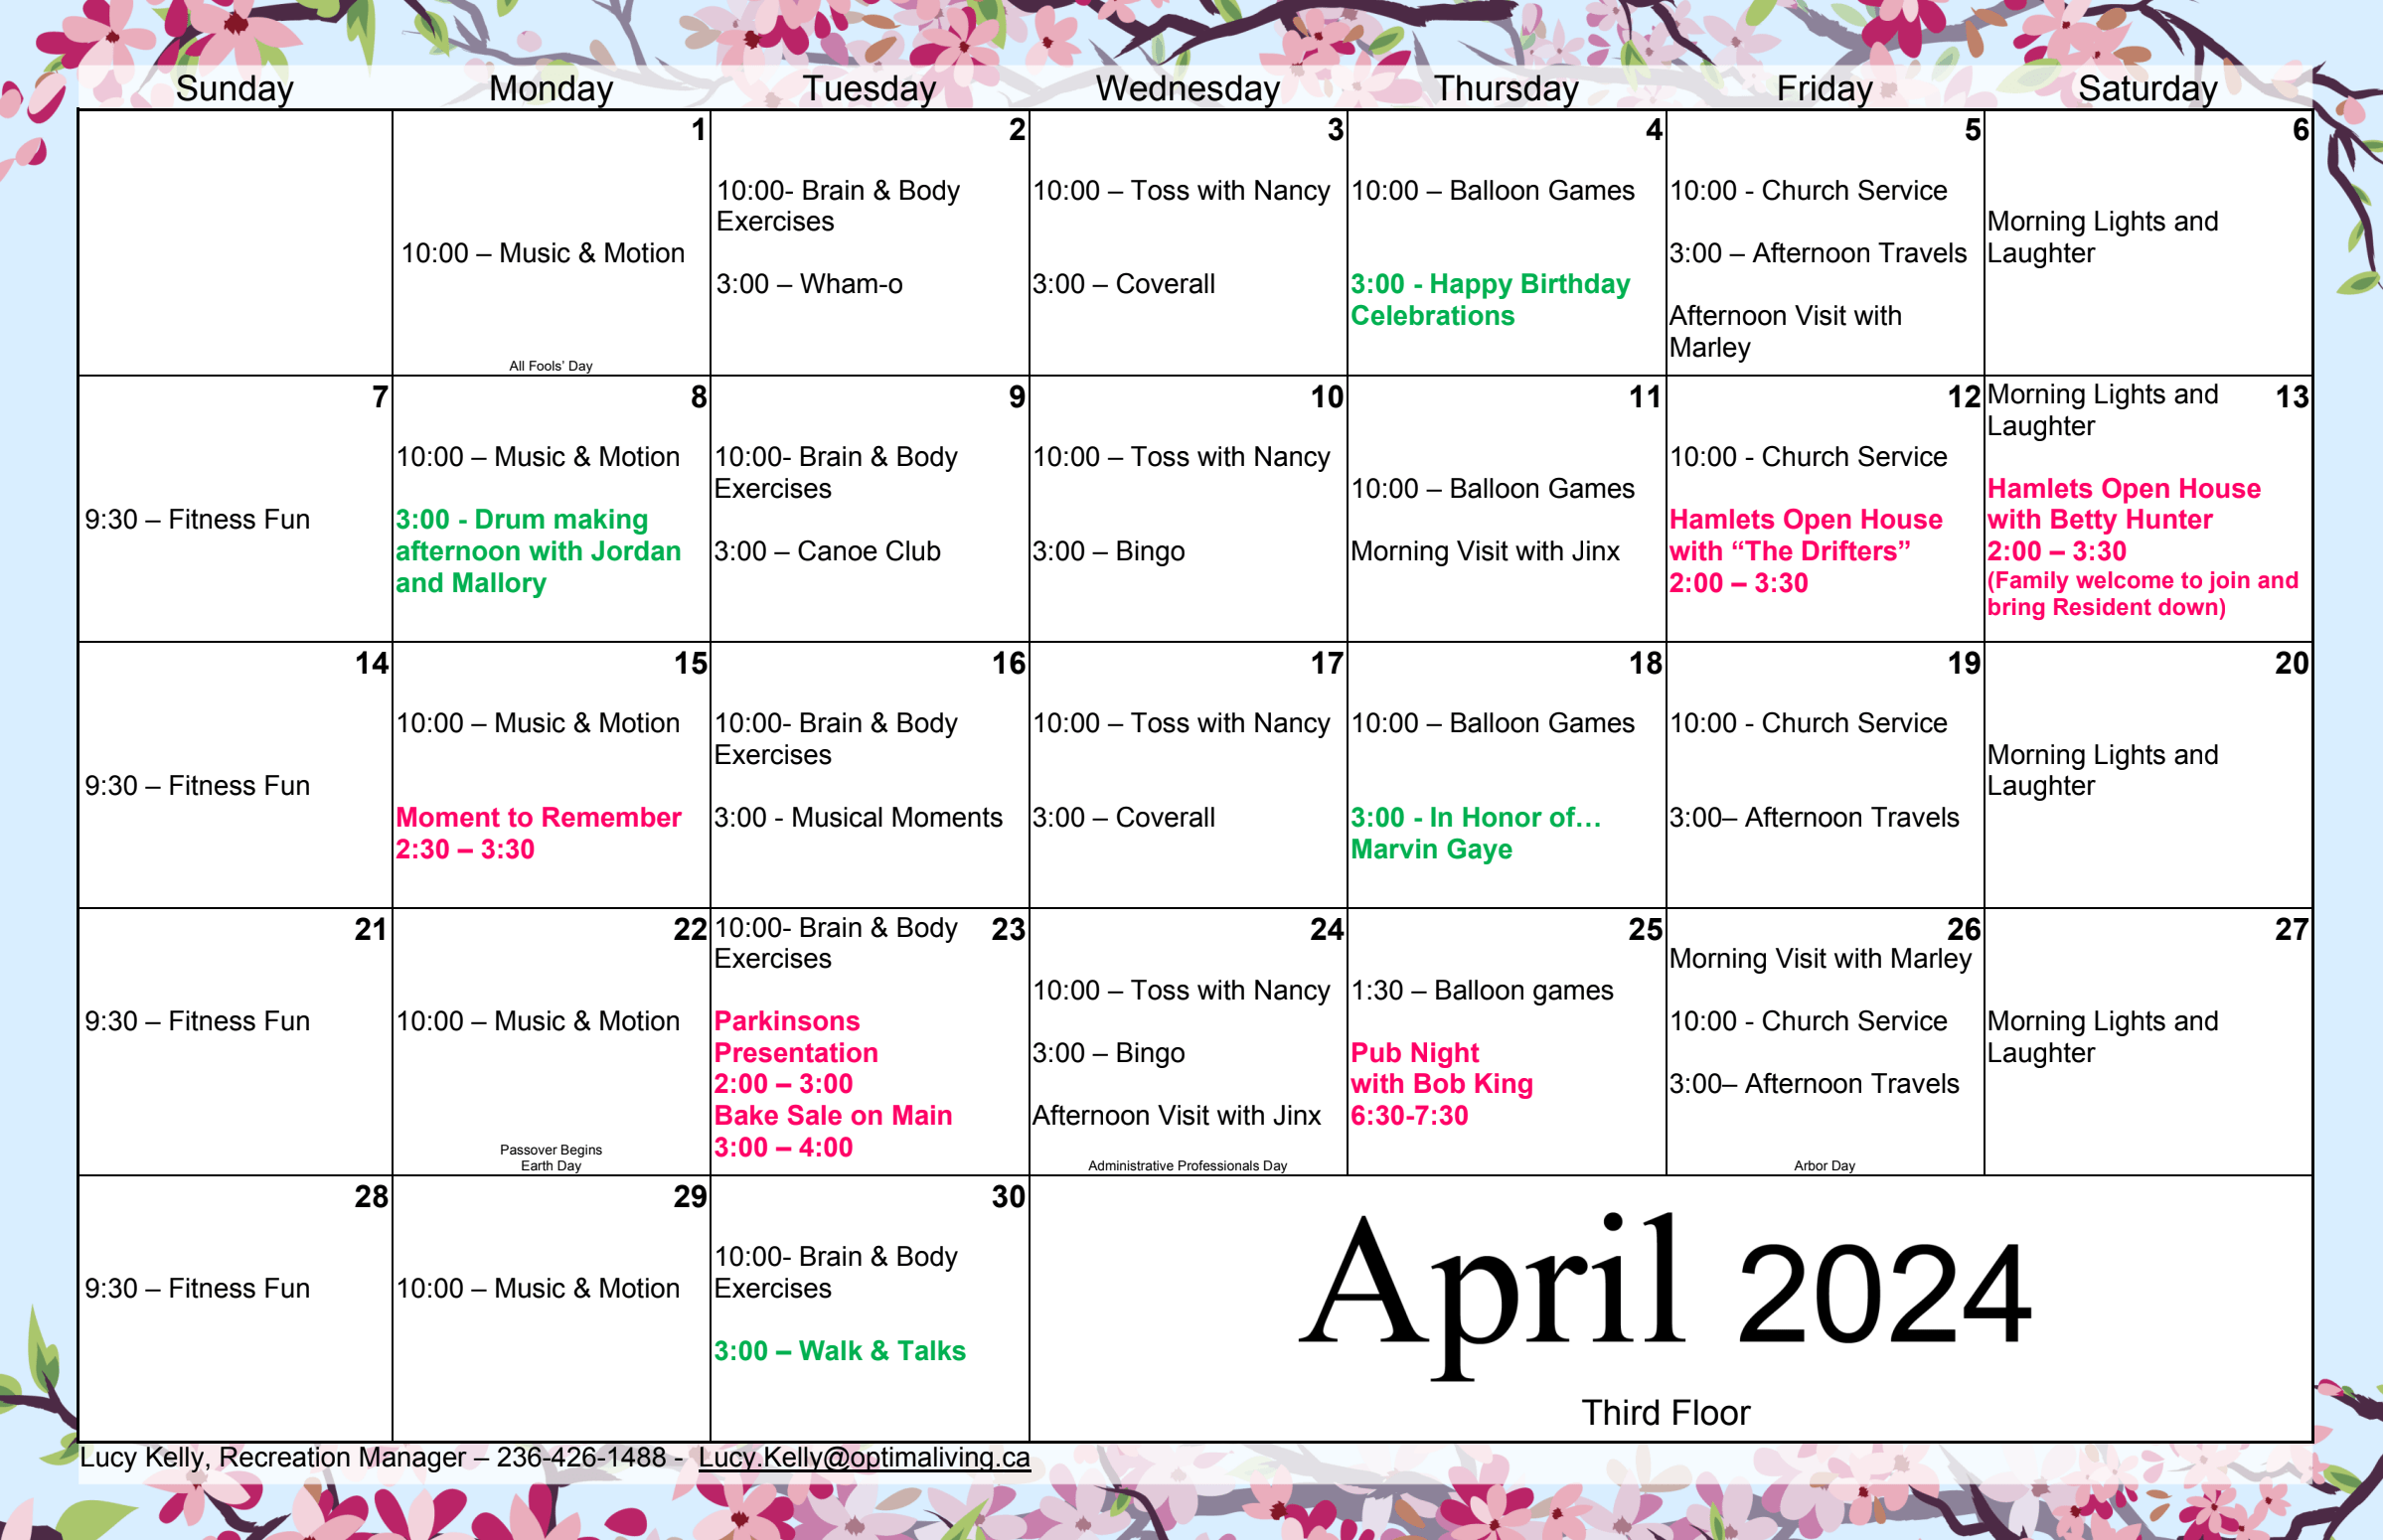 The Hamlets at Vernon April 2024 Third Floor event calendar